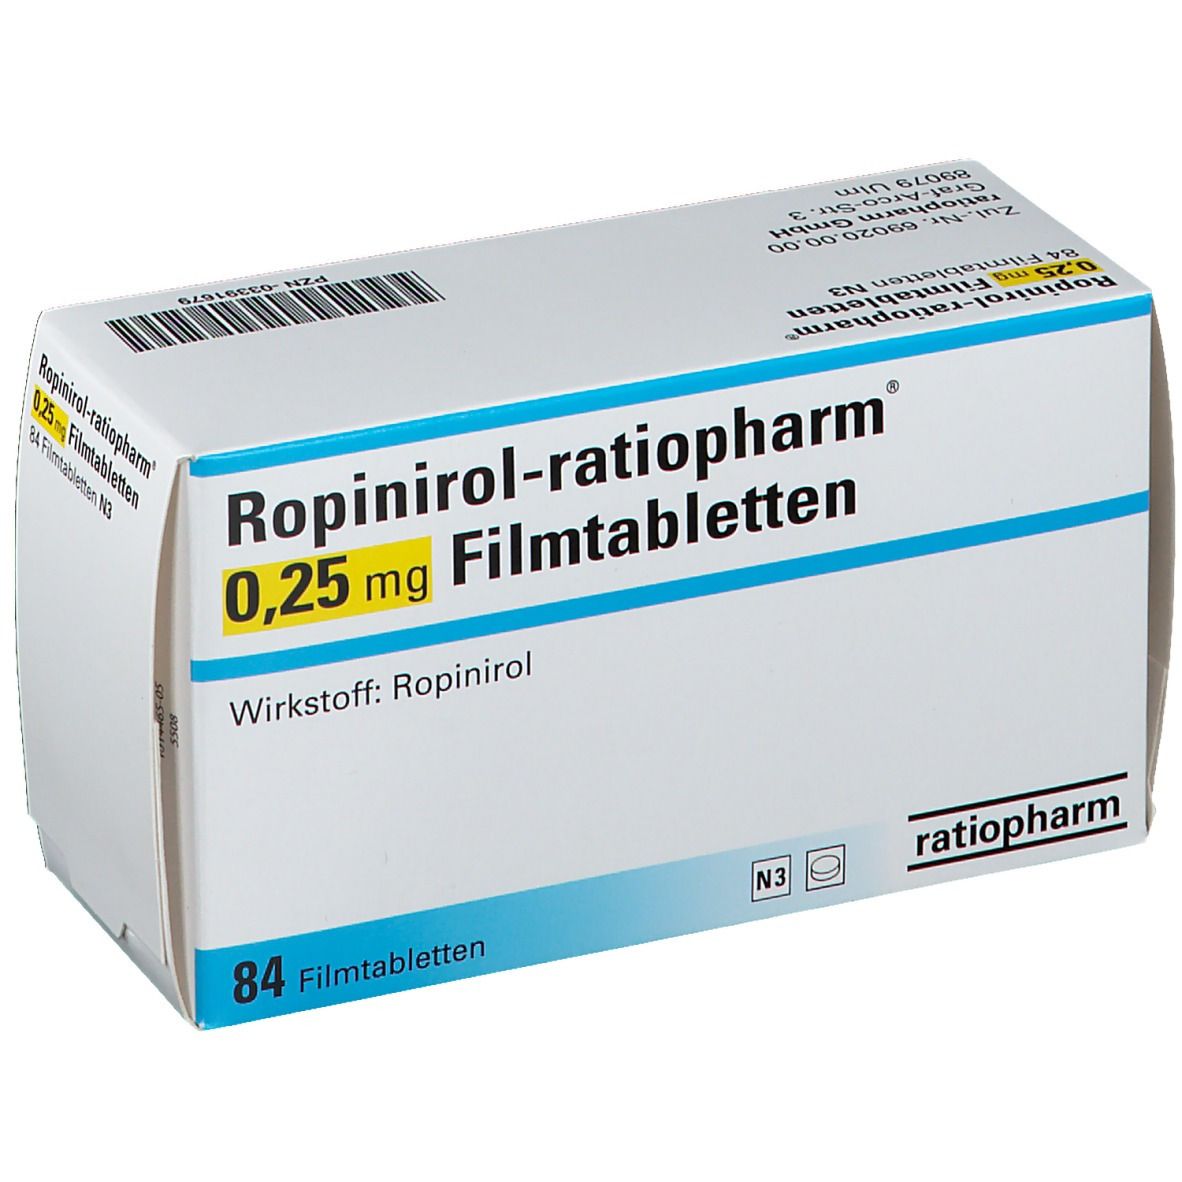 Ropinirol-ratiopharm® 0,25 mg